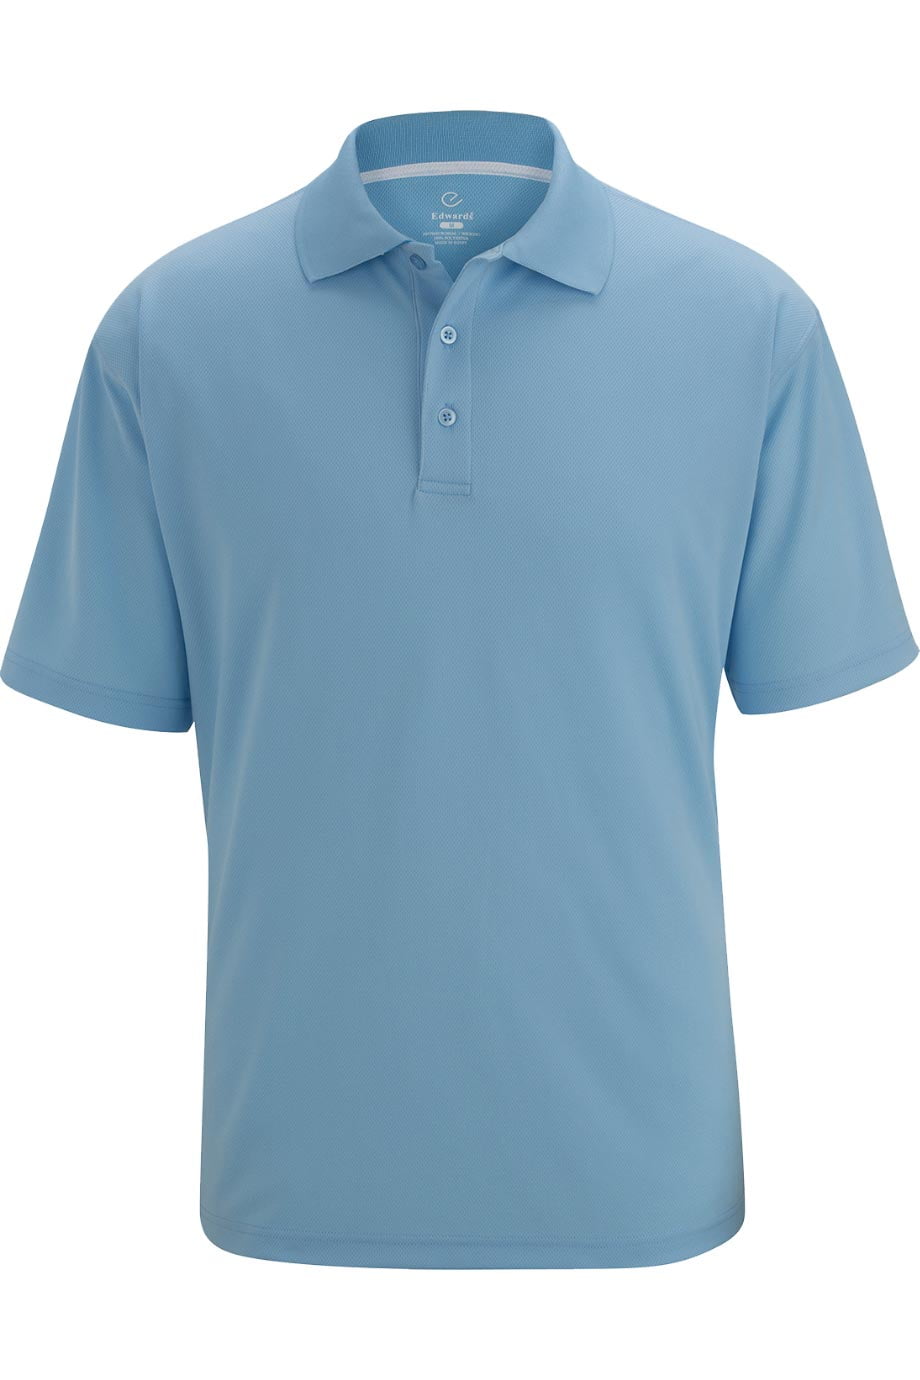 Edwards Garments Men's Moisture Wicking Short Sleeve Sport Polo Shirt